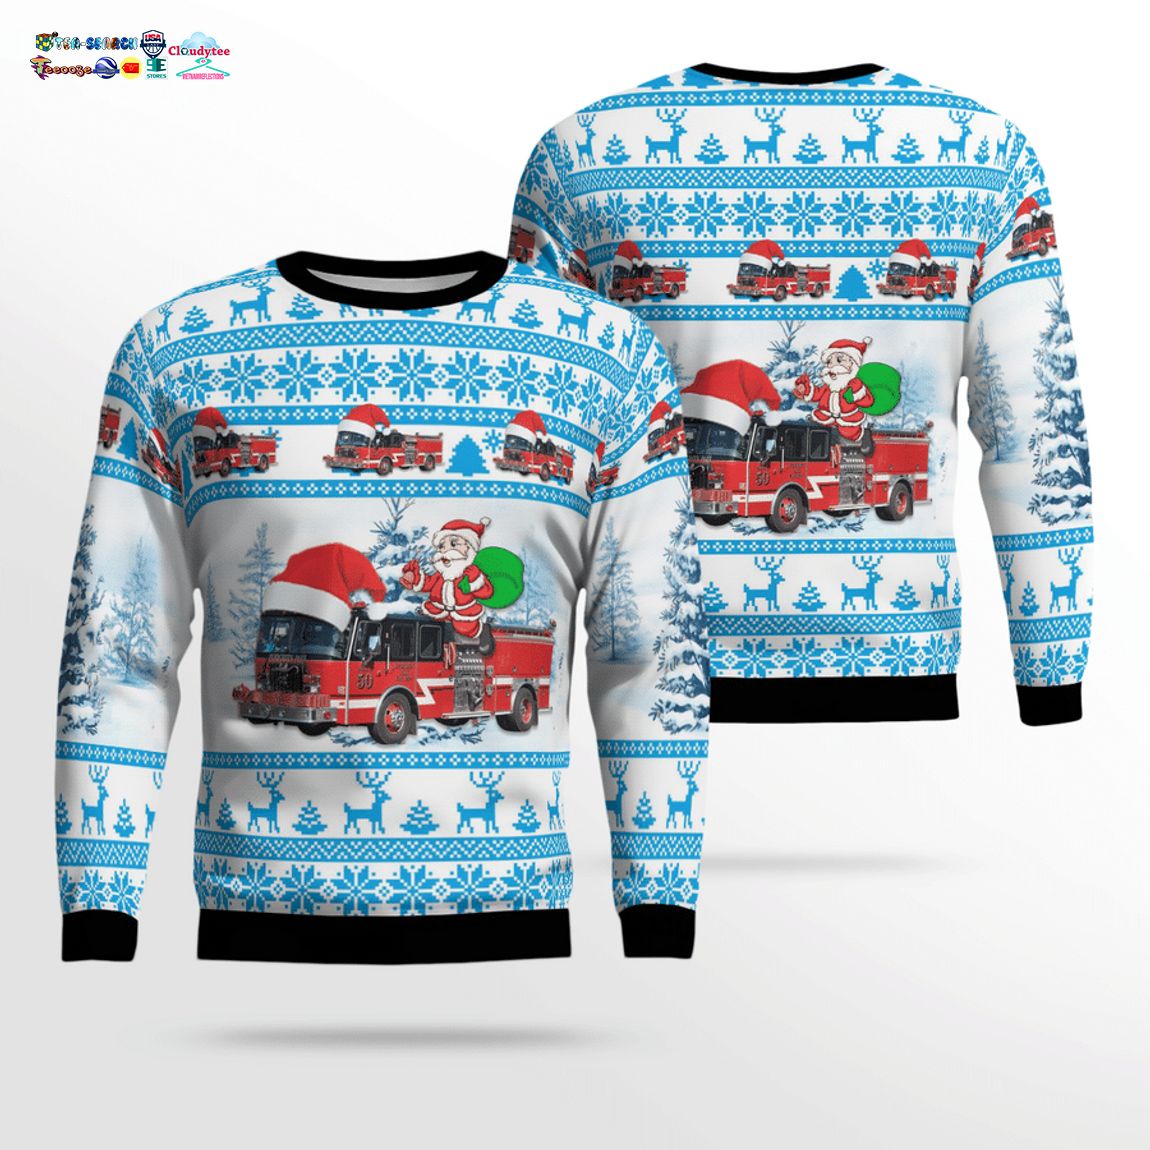 Illinois Evergreen Park Fire Department 3D Christmas Sweater